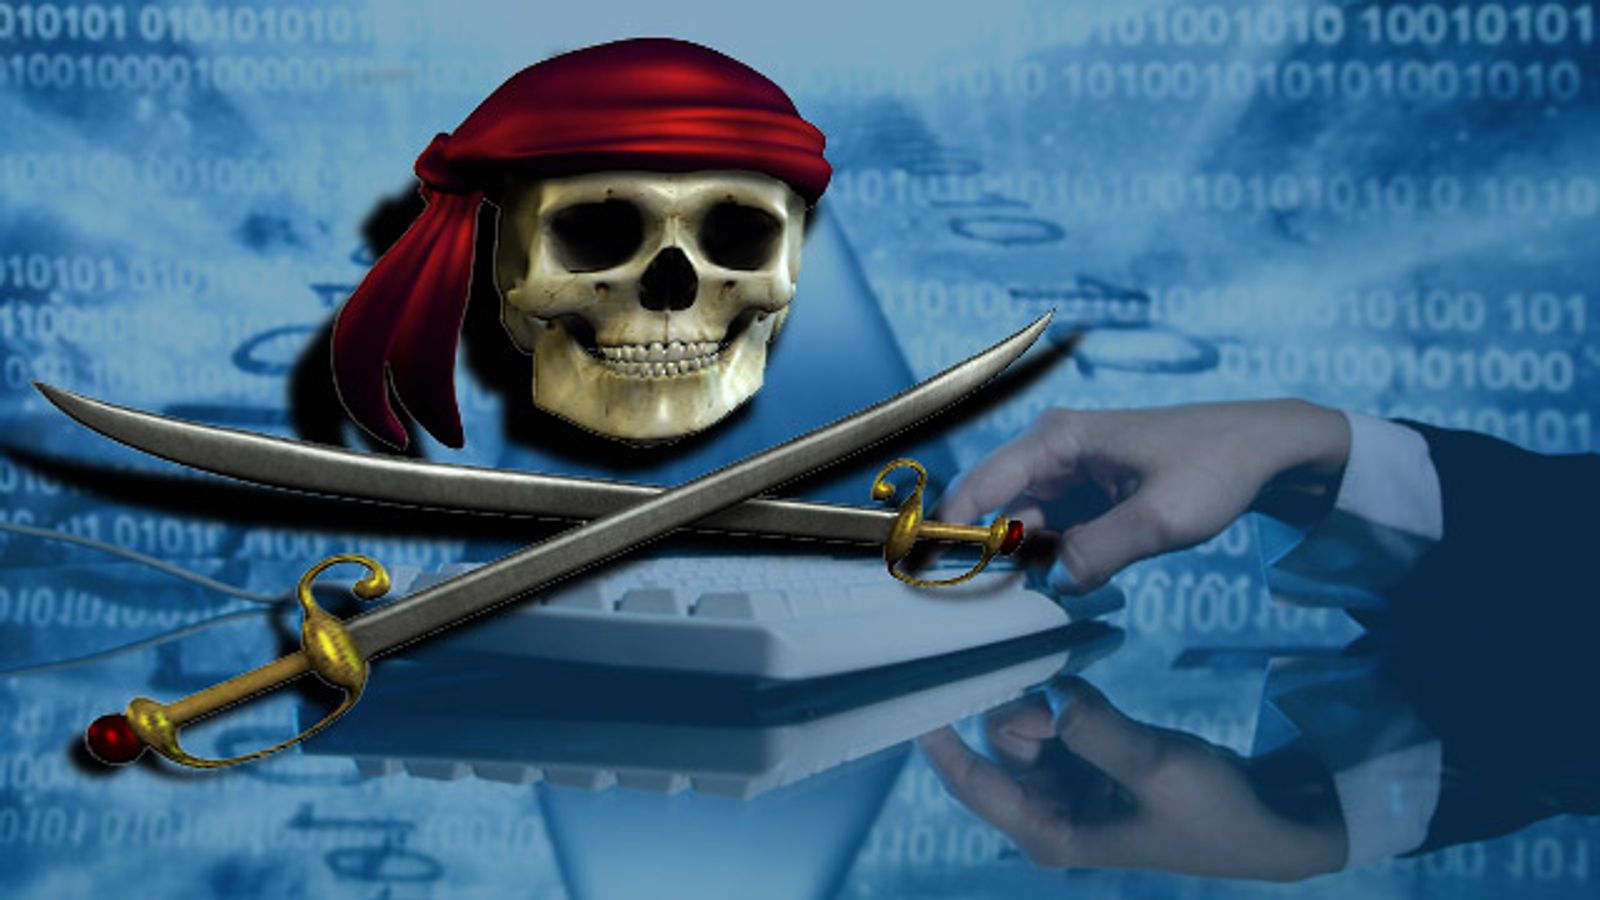 NY Times: Mainstream Studios Losing to Digital Pirates